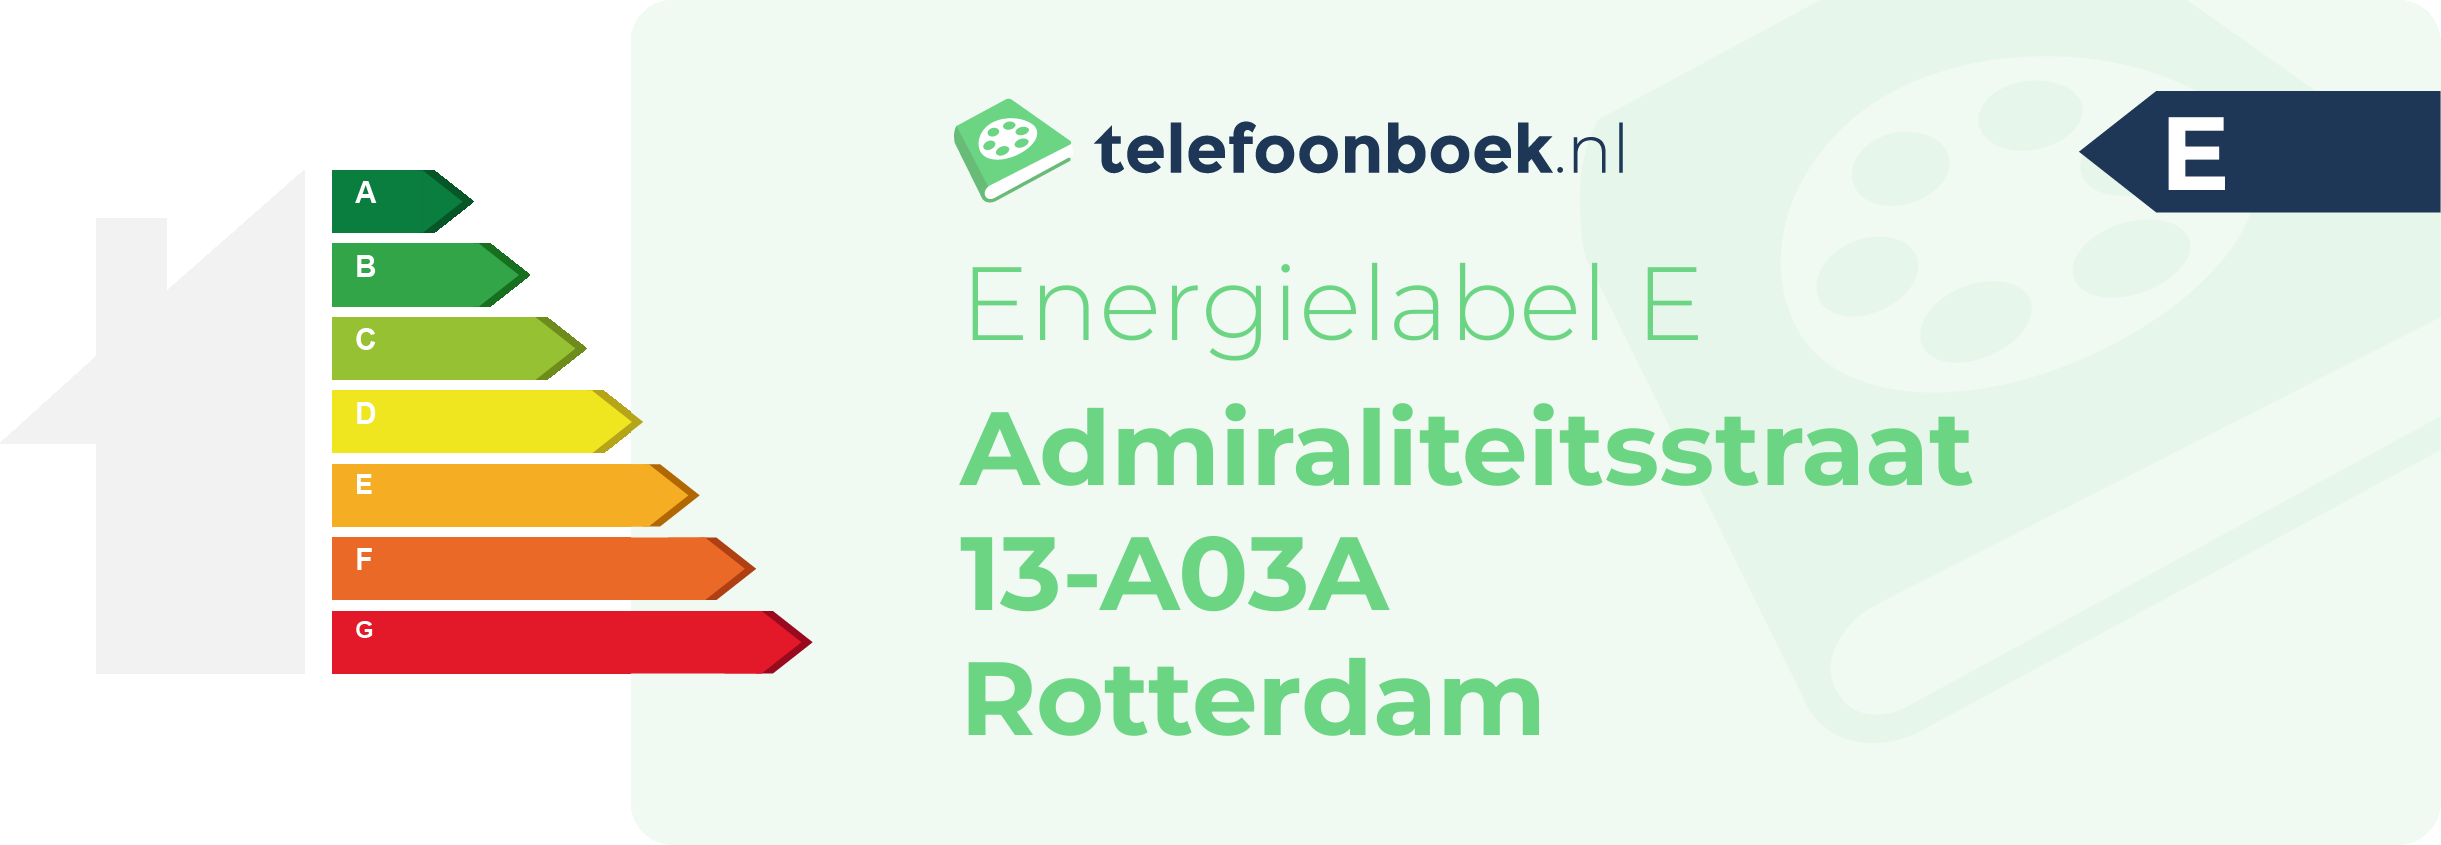 Energielabel Admiraliteitsstraat 13-A03A Rotterdam